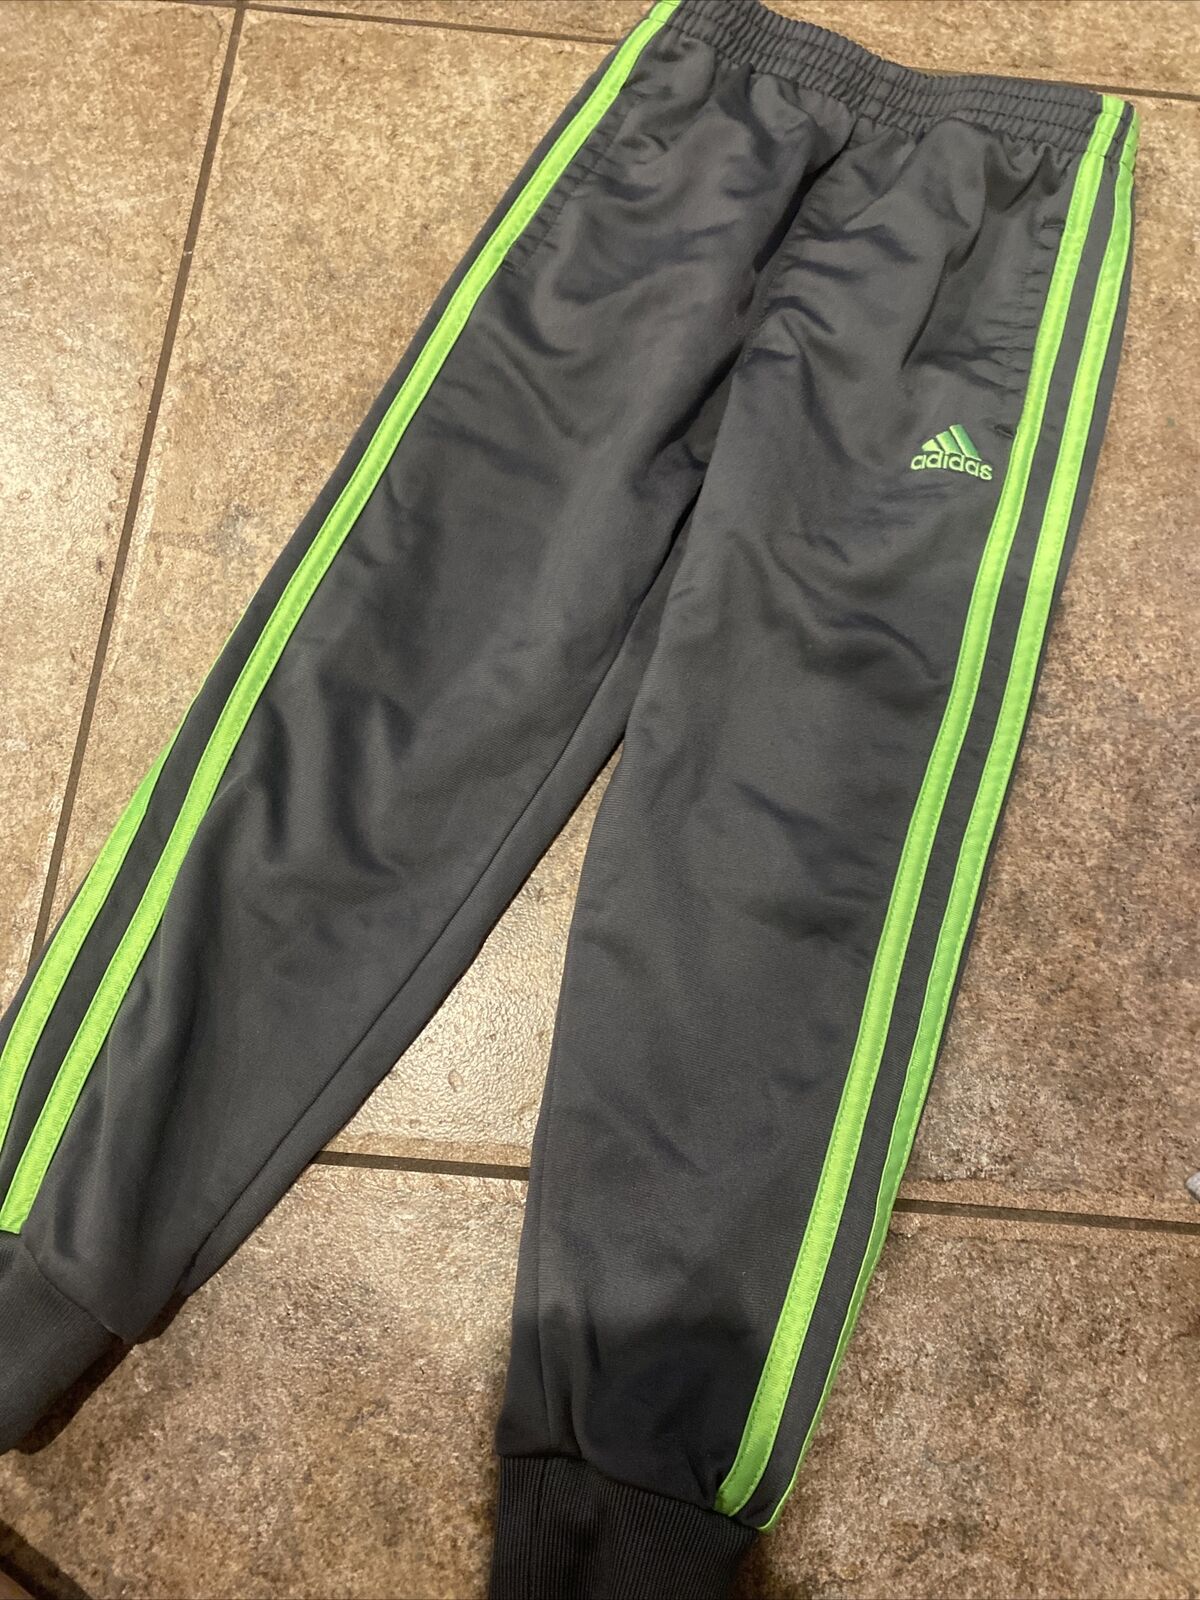 Boys Adidas Jogger Sweatpants Size 6